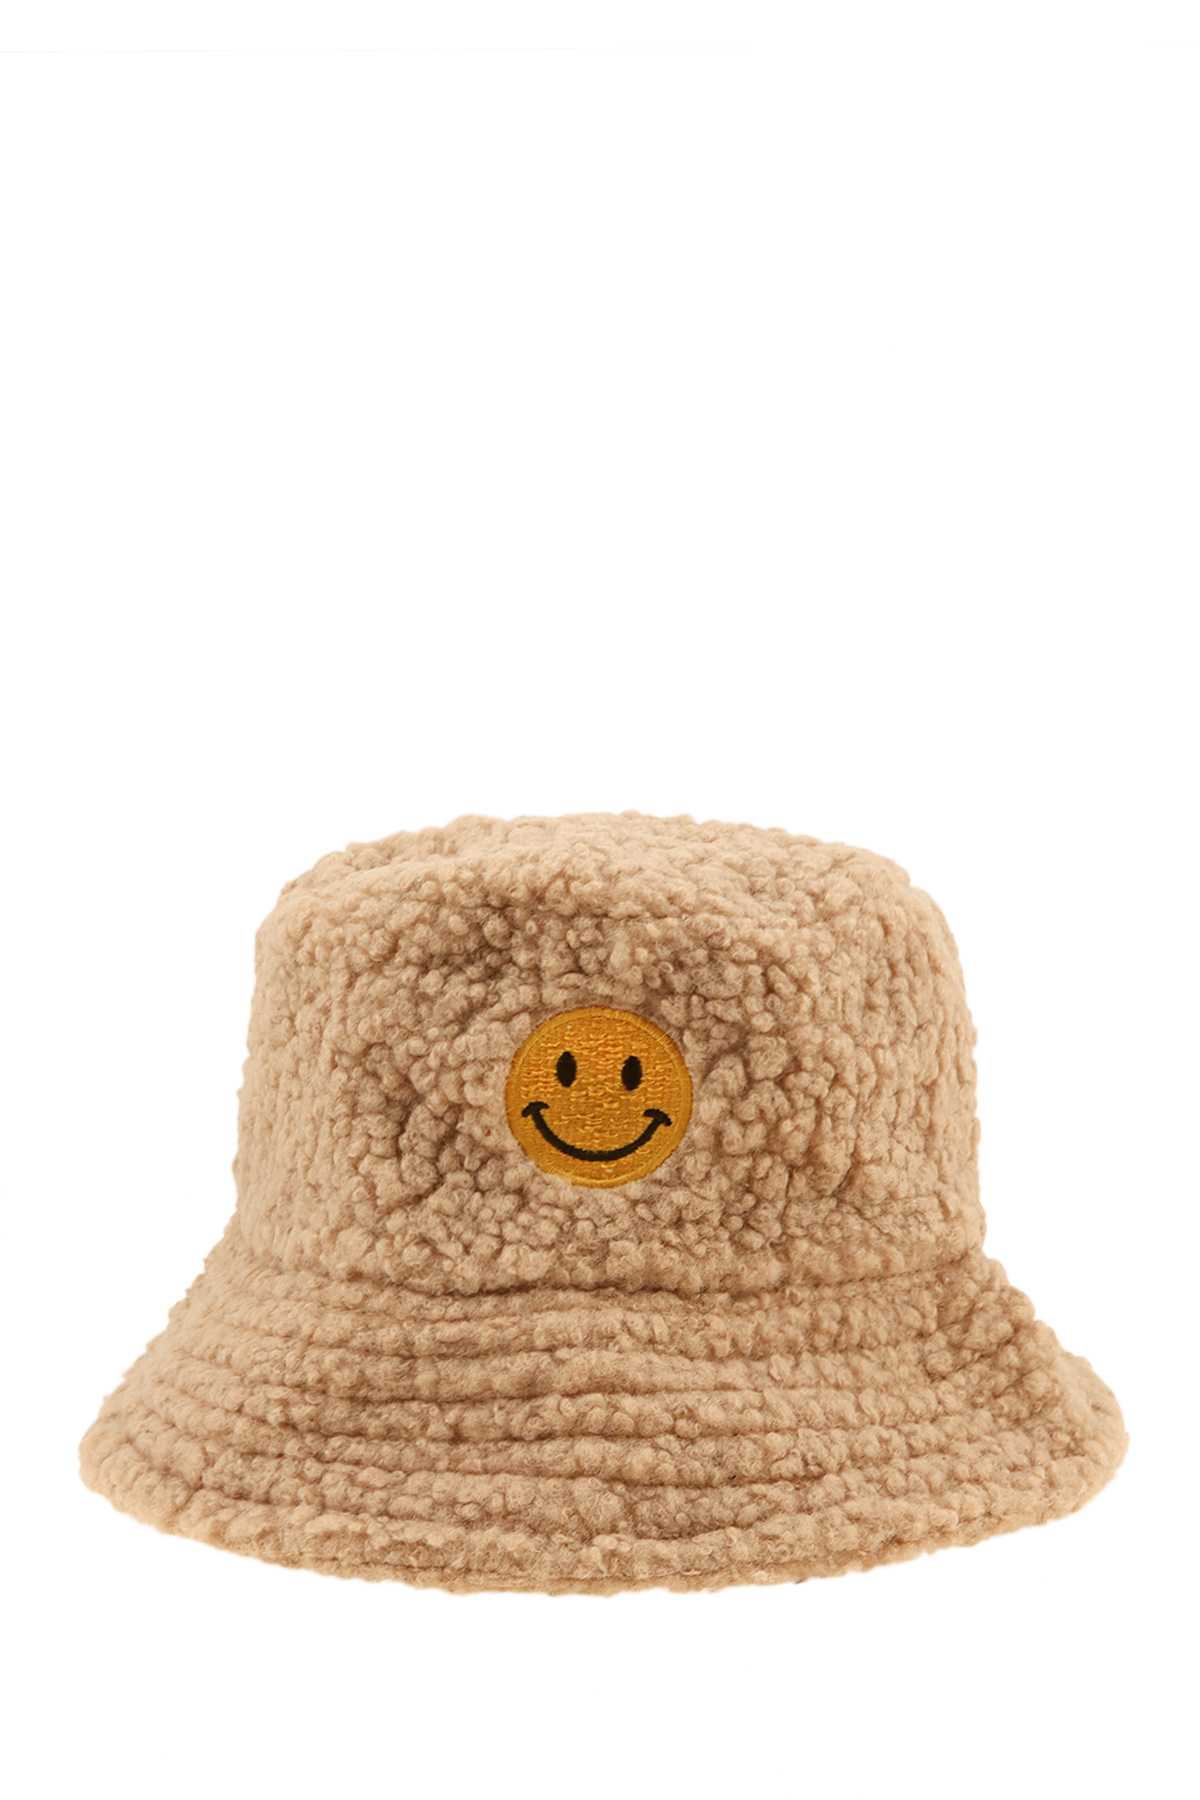 Fleece Bucket Hat with Smile Accent